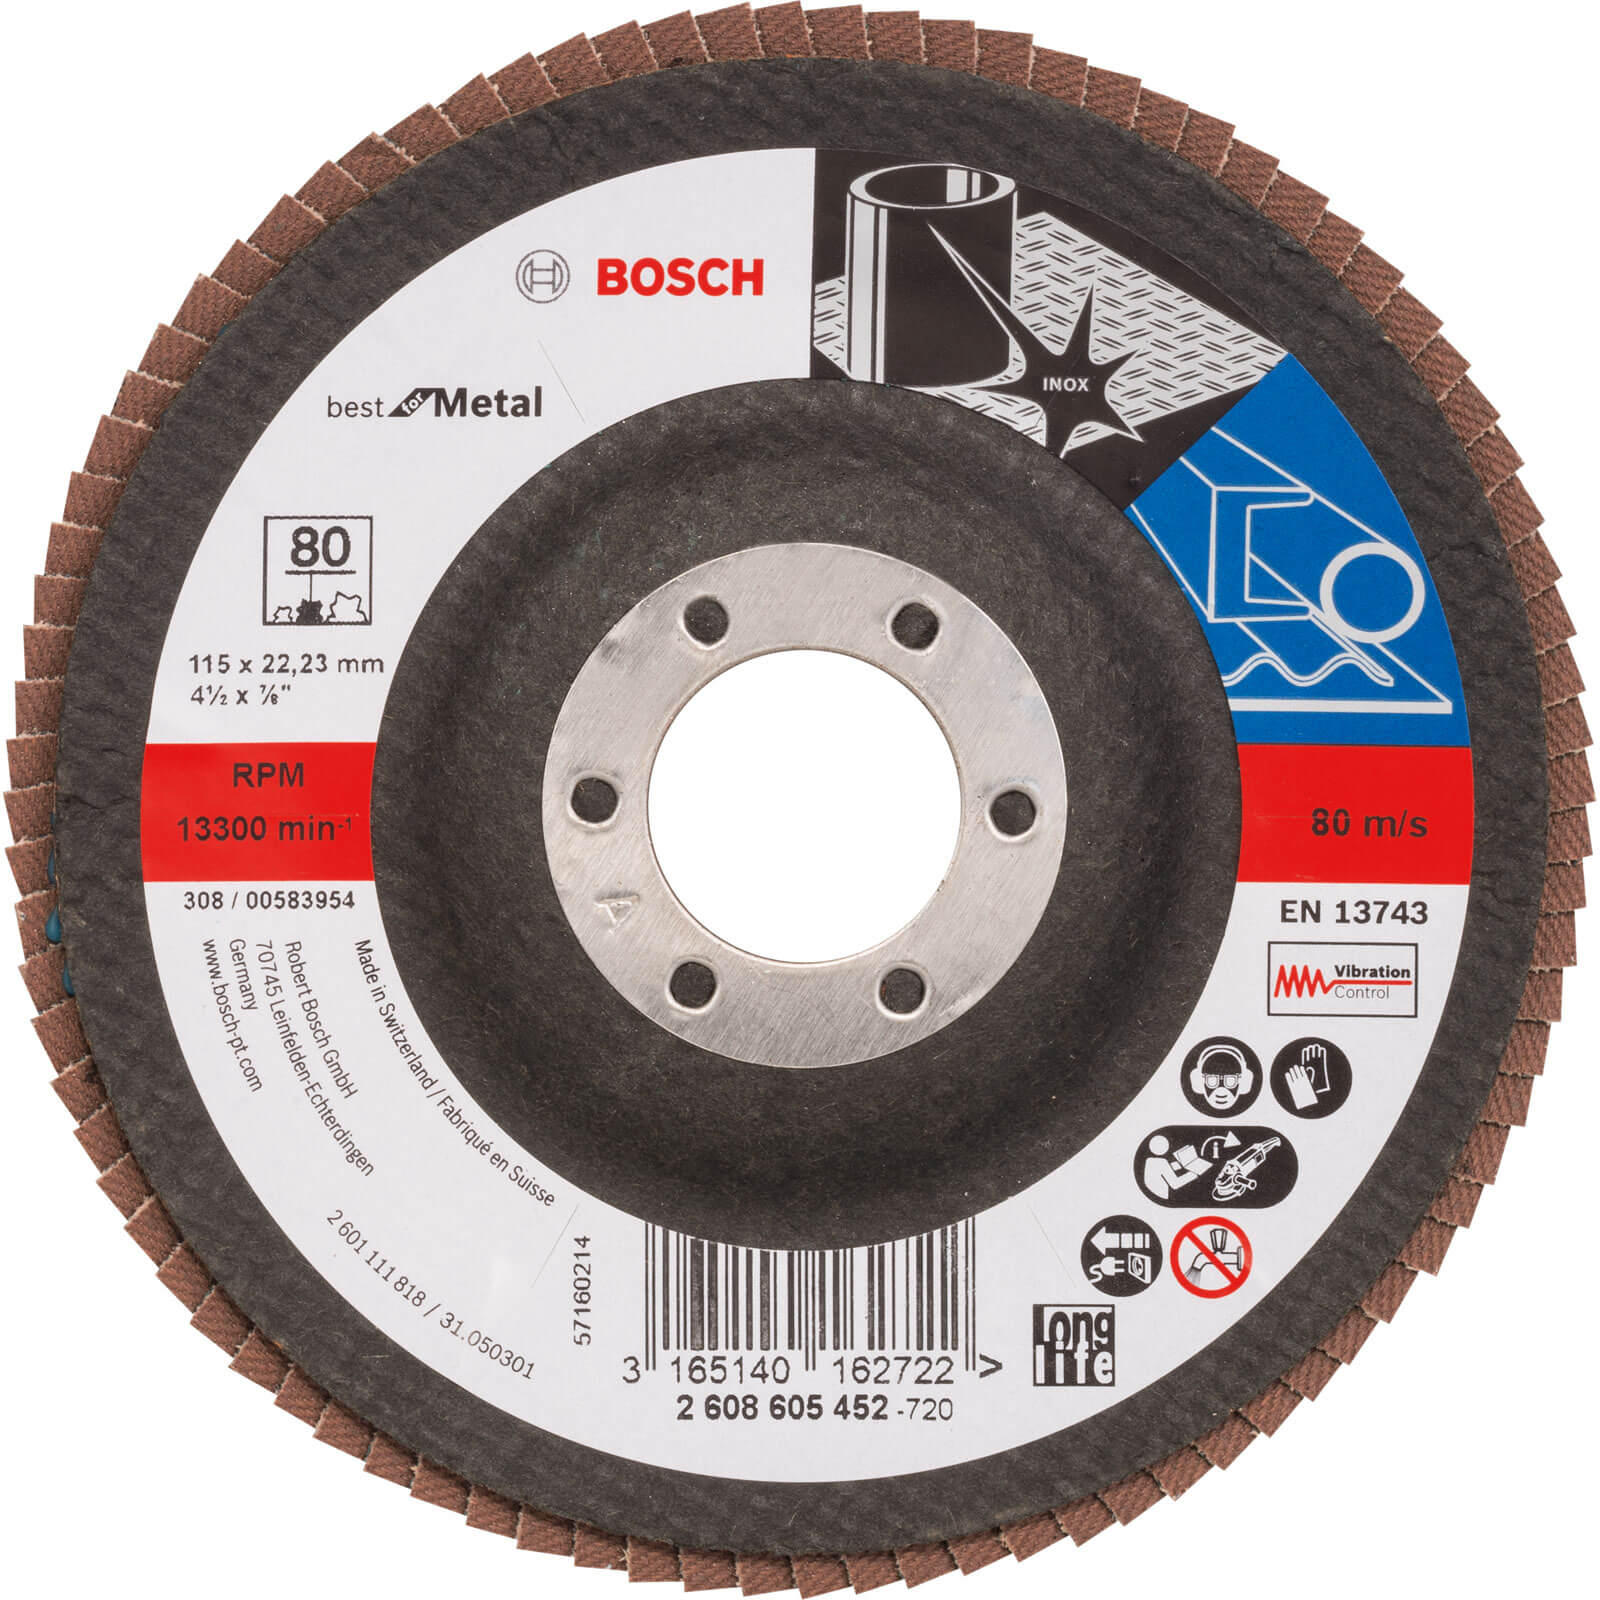 Image of Bosch Zirconium Abrasive Flap Disc 115mm 80g